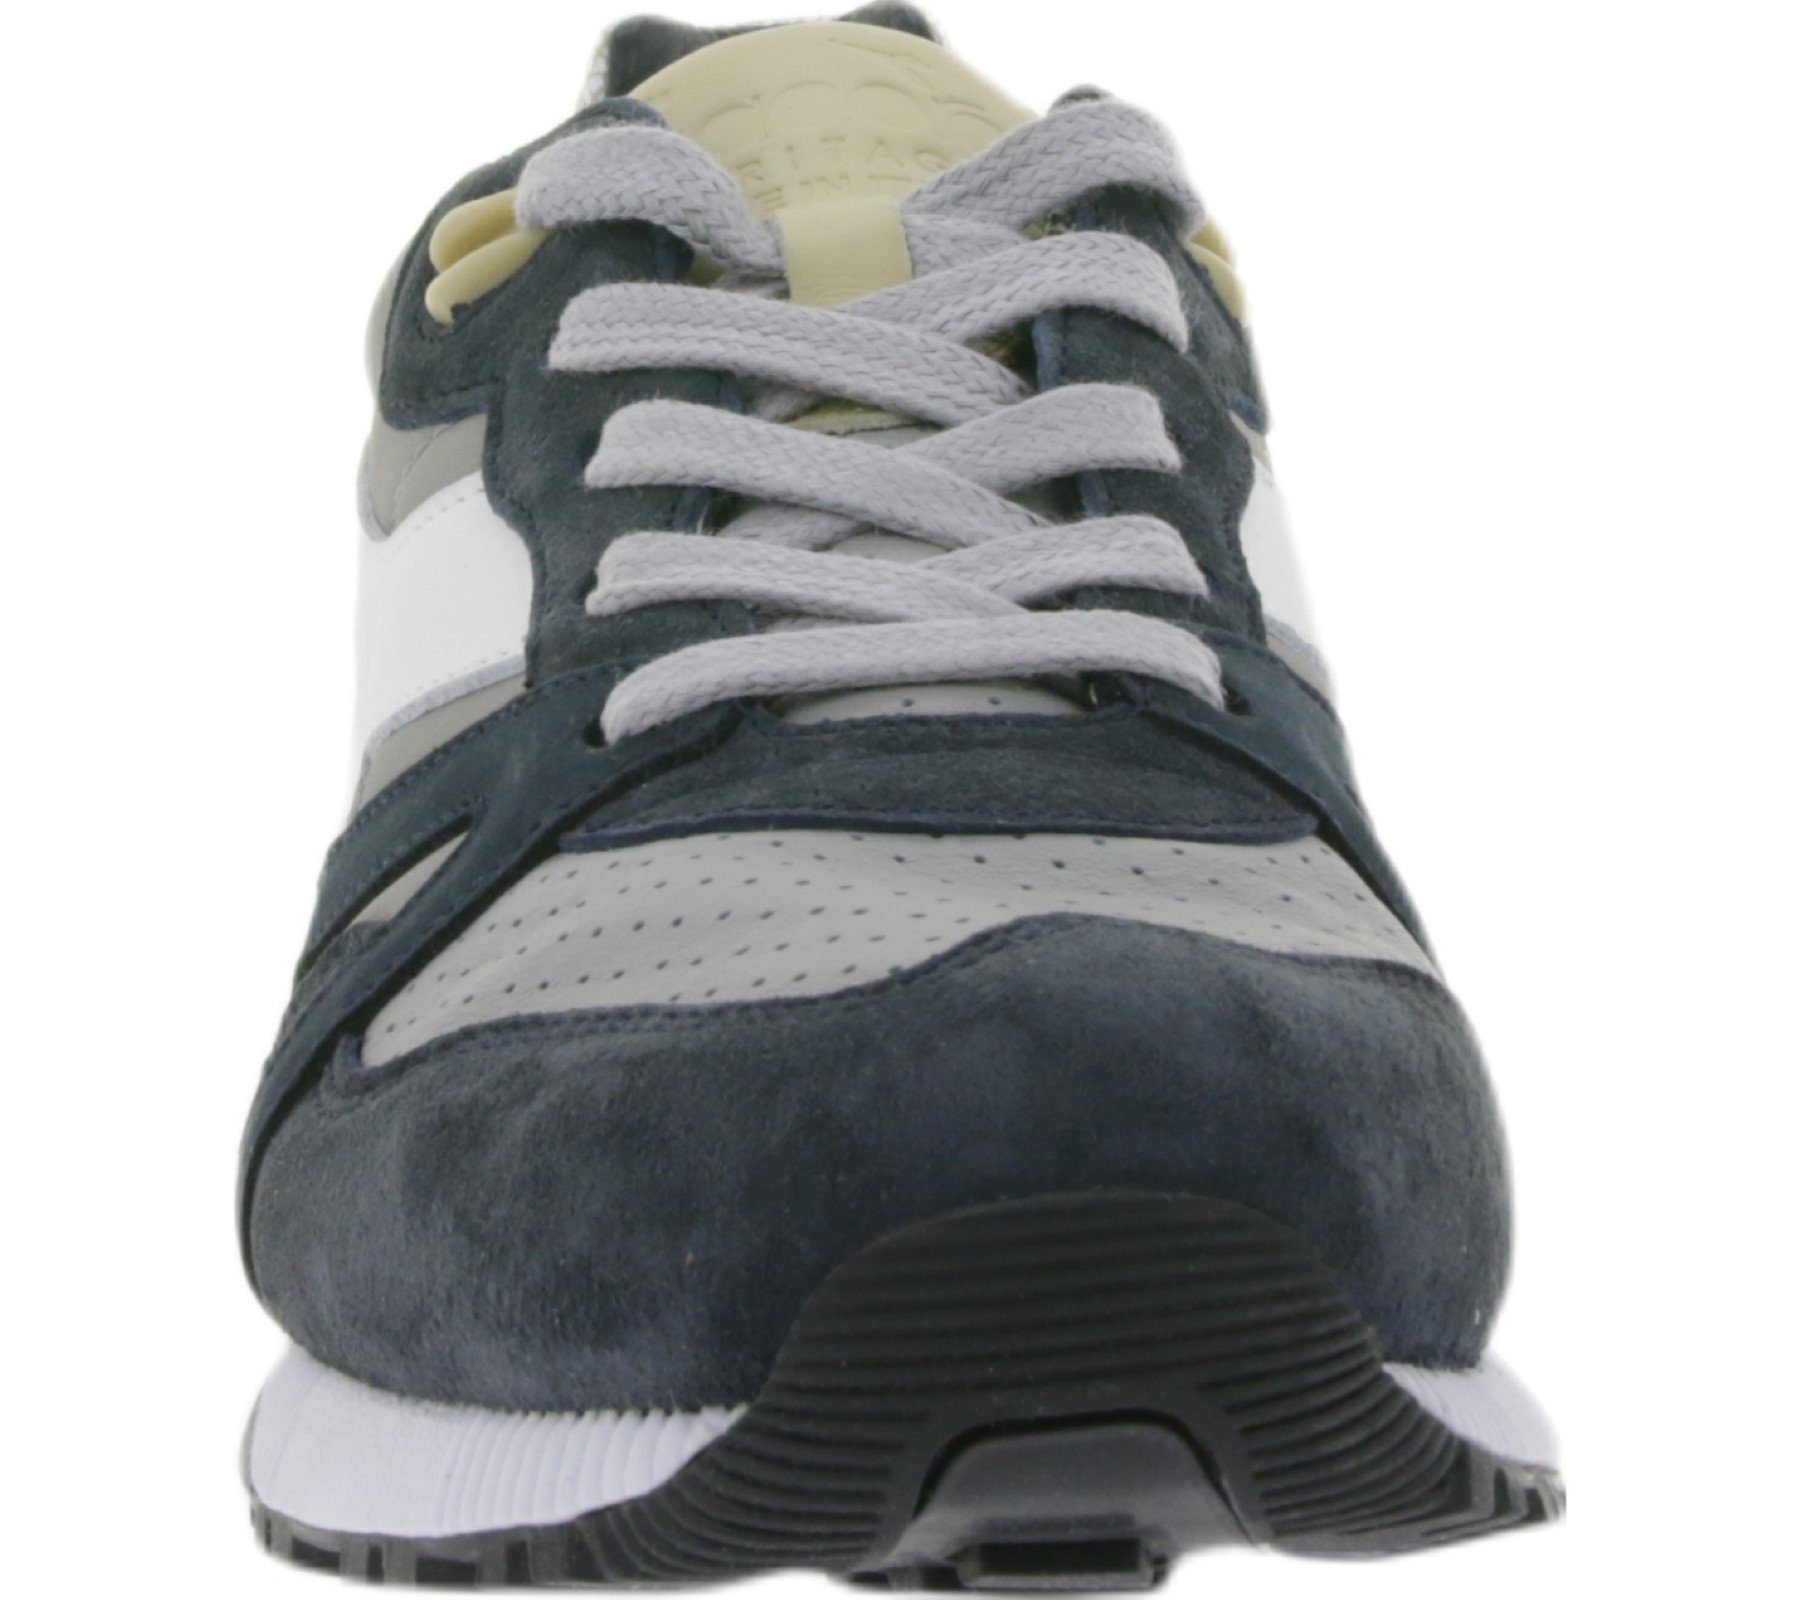 Turnschuhe N9000 in Heritage Diadora Low Blau/Grau Sneaker diadora Italy Sneaker Made Damen Top 201.177990.75067 Schuhe